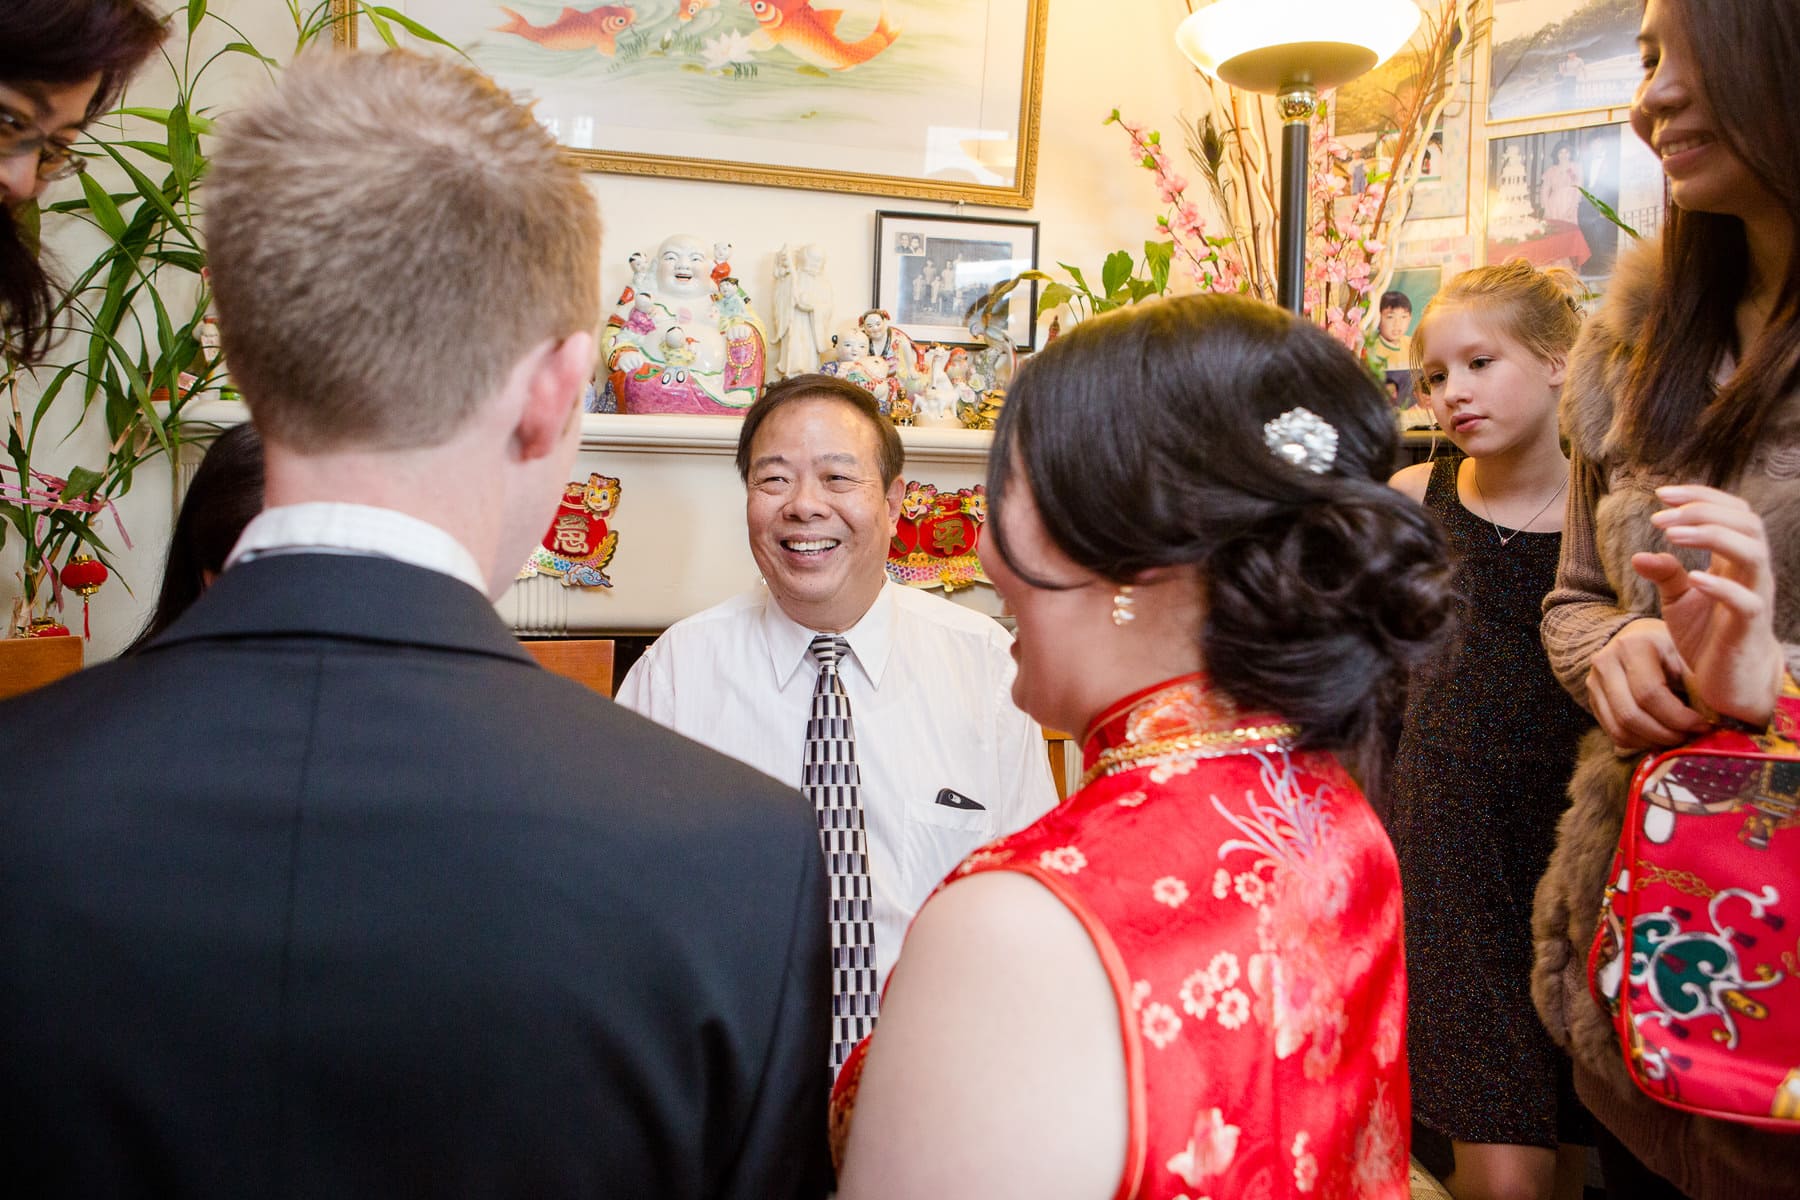 Man in between bride and groom smiling during tea ceremony